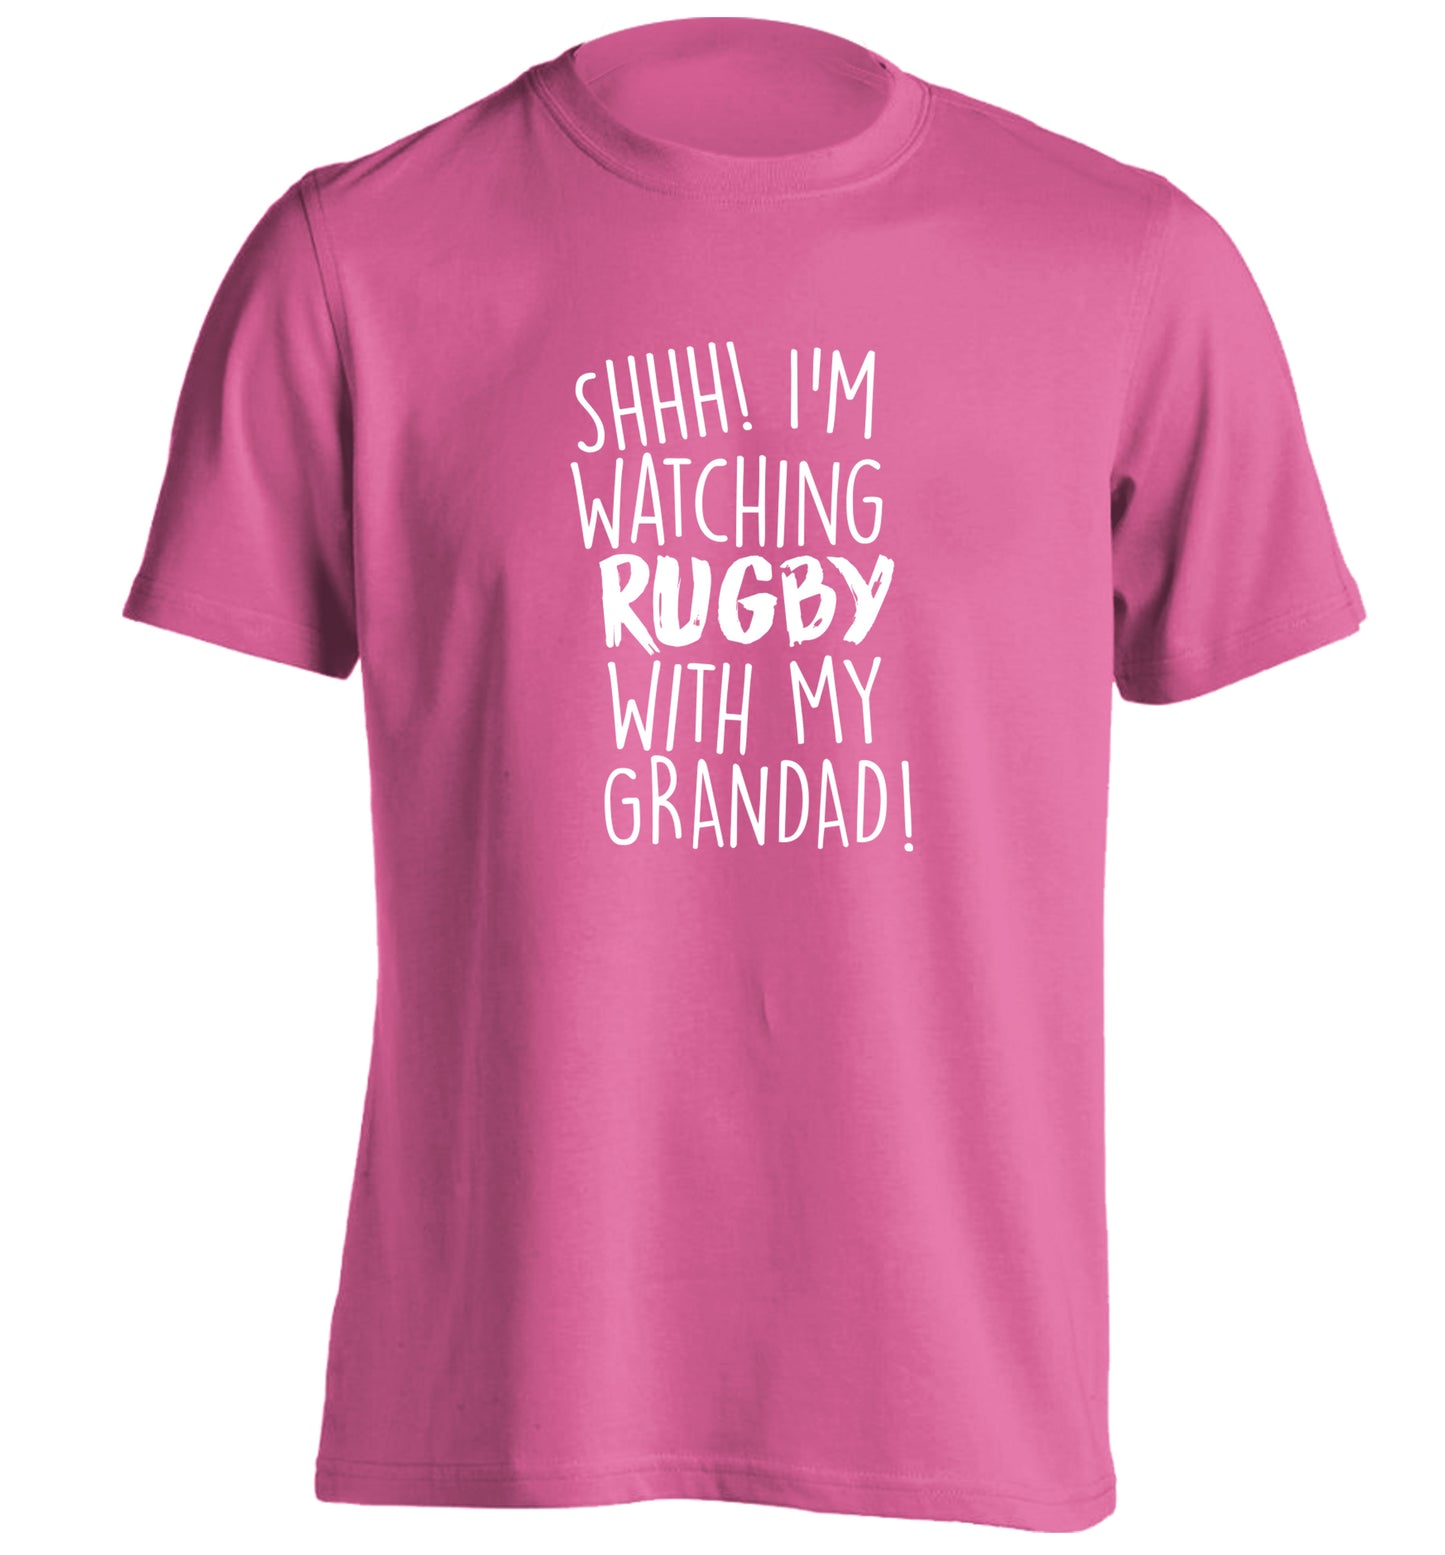 Shh I'm watching rugby with my grandad adults unisex pink Tshirt 2XL